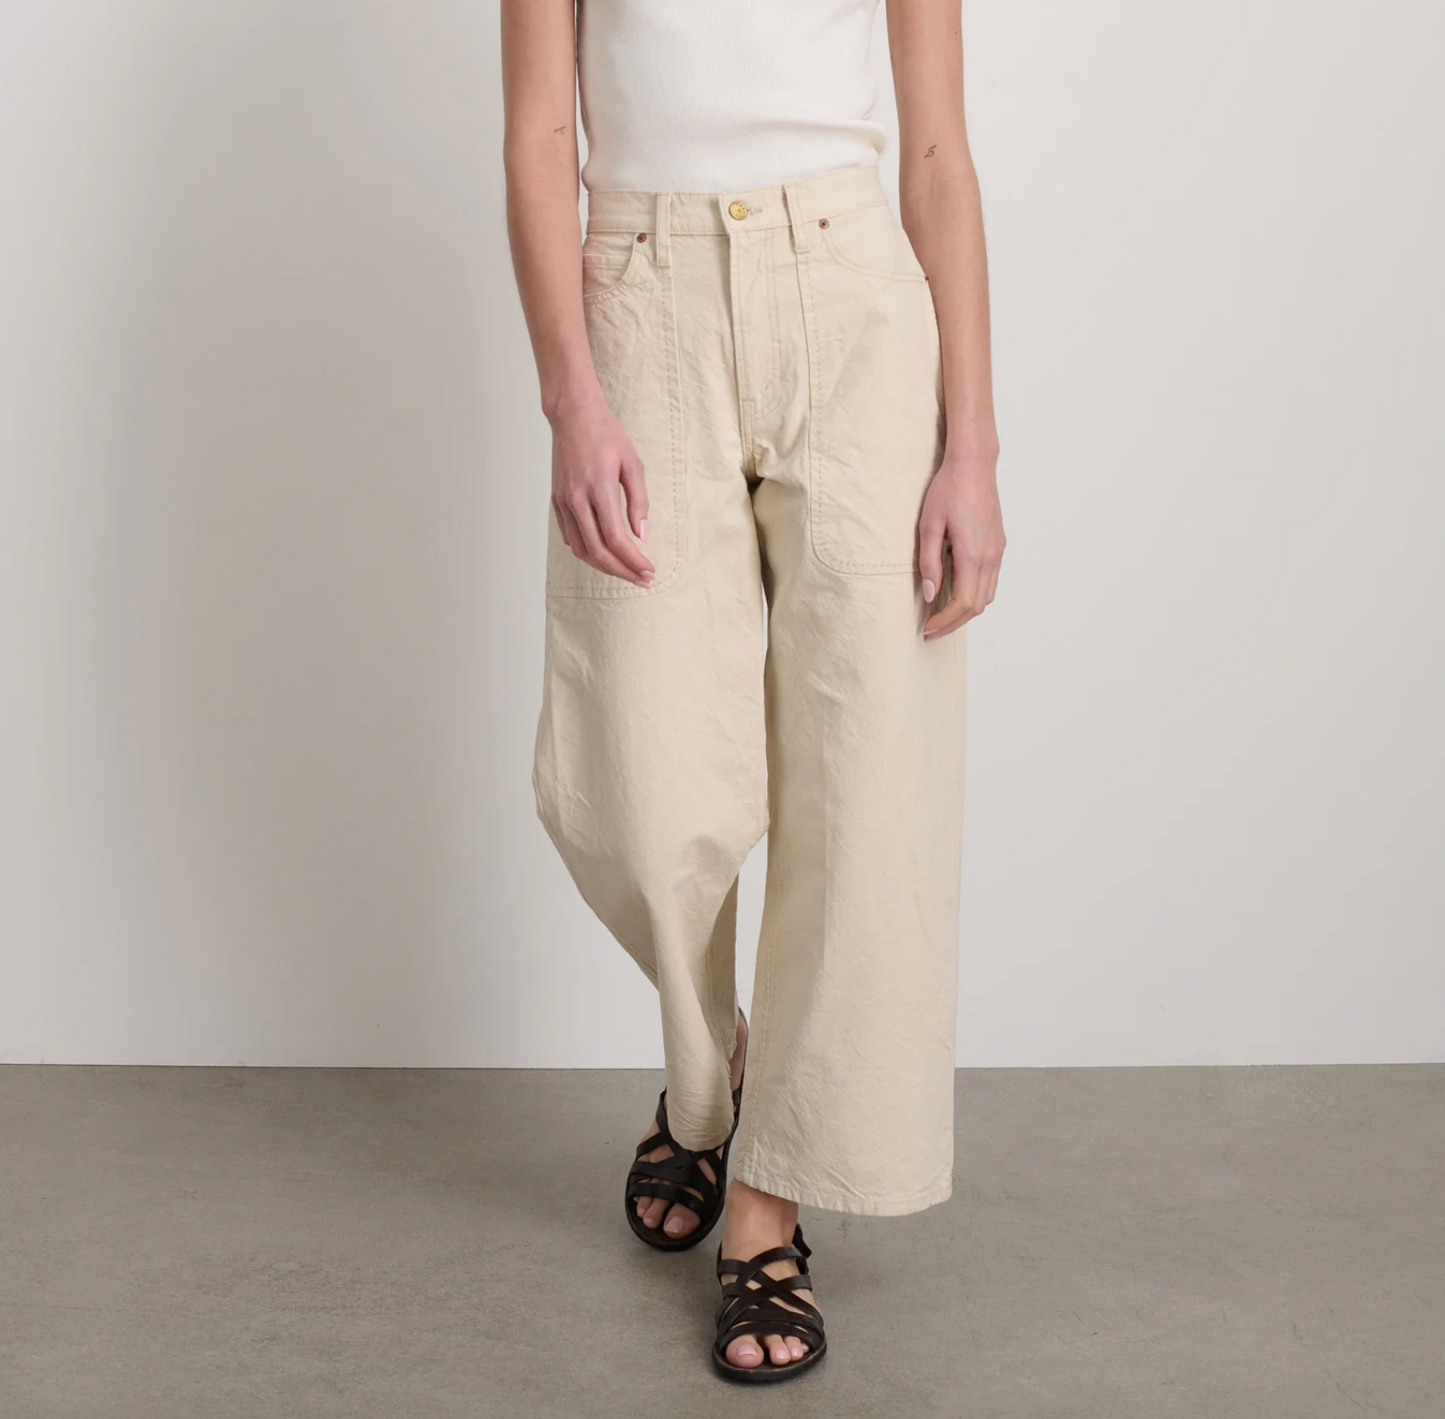 B Sides - Elissa Patch Pocket Mere White Jeans - Image 2